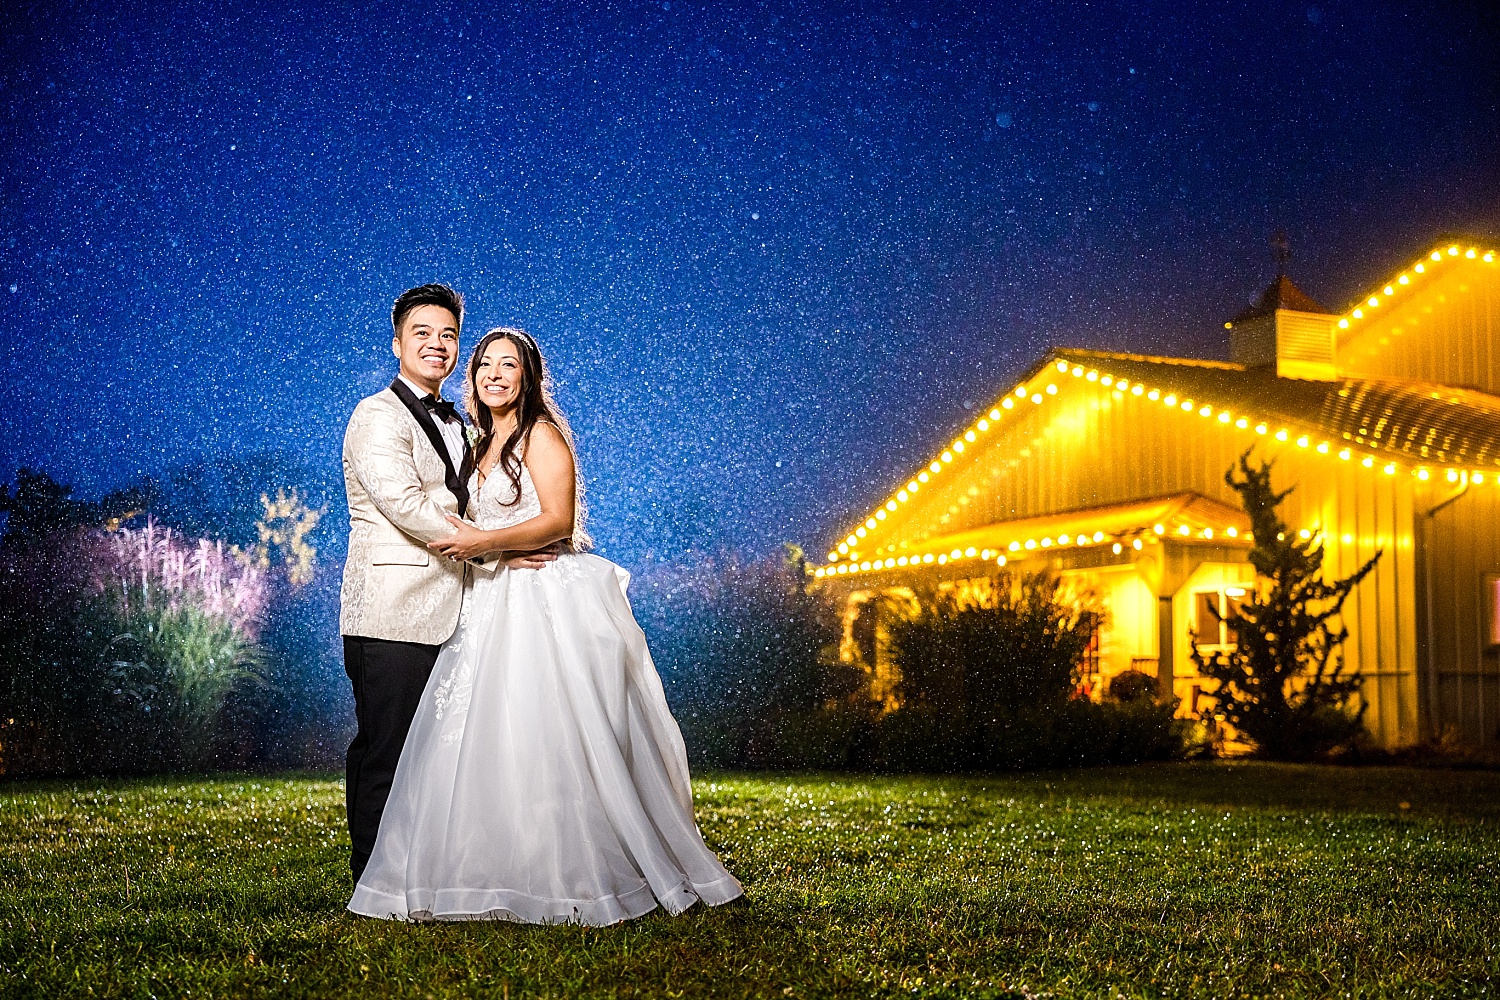 rainy nighttime wedding ay photographs at the Northfork Estate in Eaton Rapids, MI